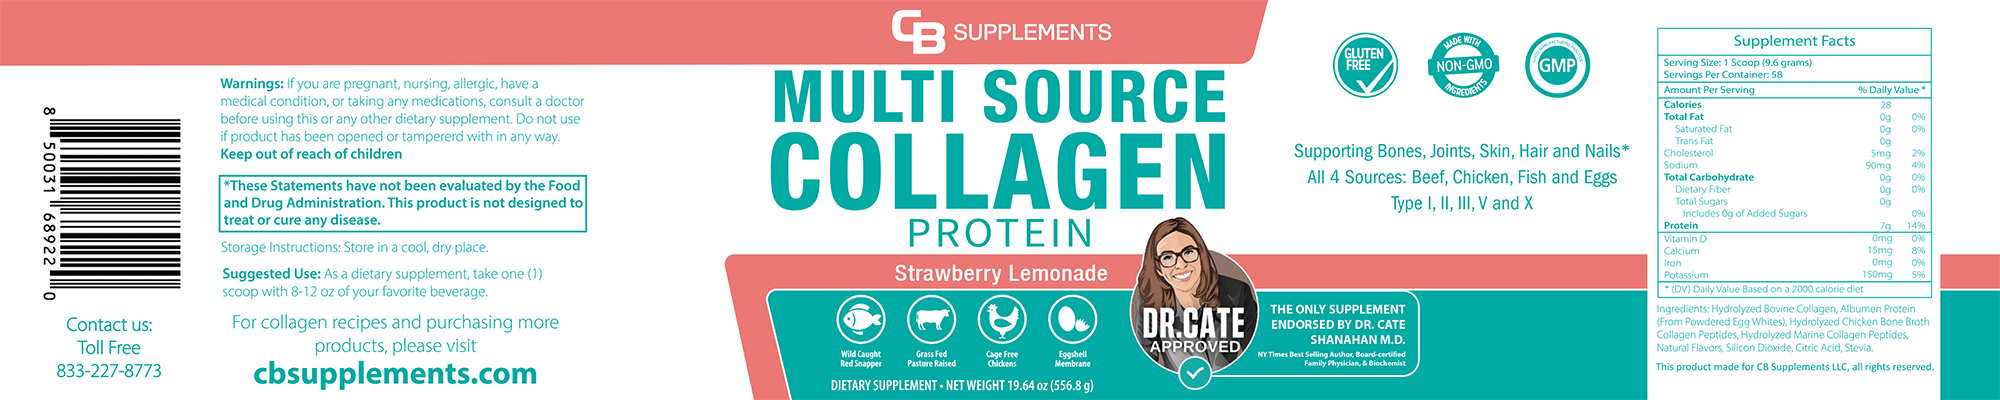 Strawberry Lemonade Multi Collagen Protein Powder Label and Ingredients